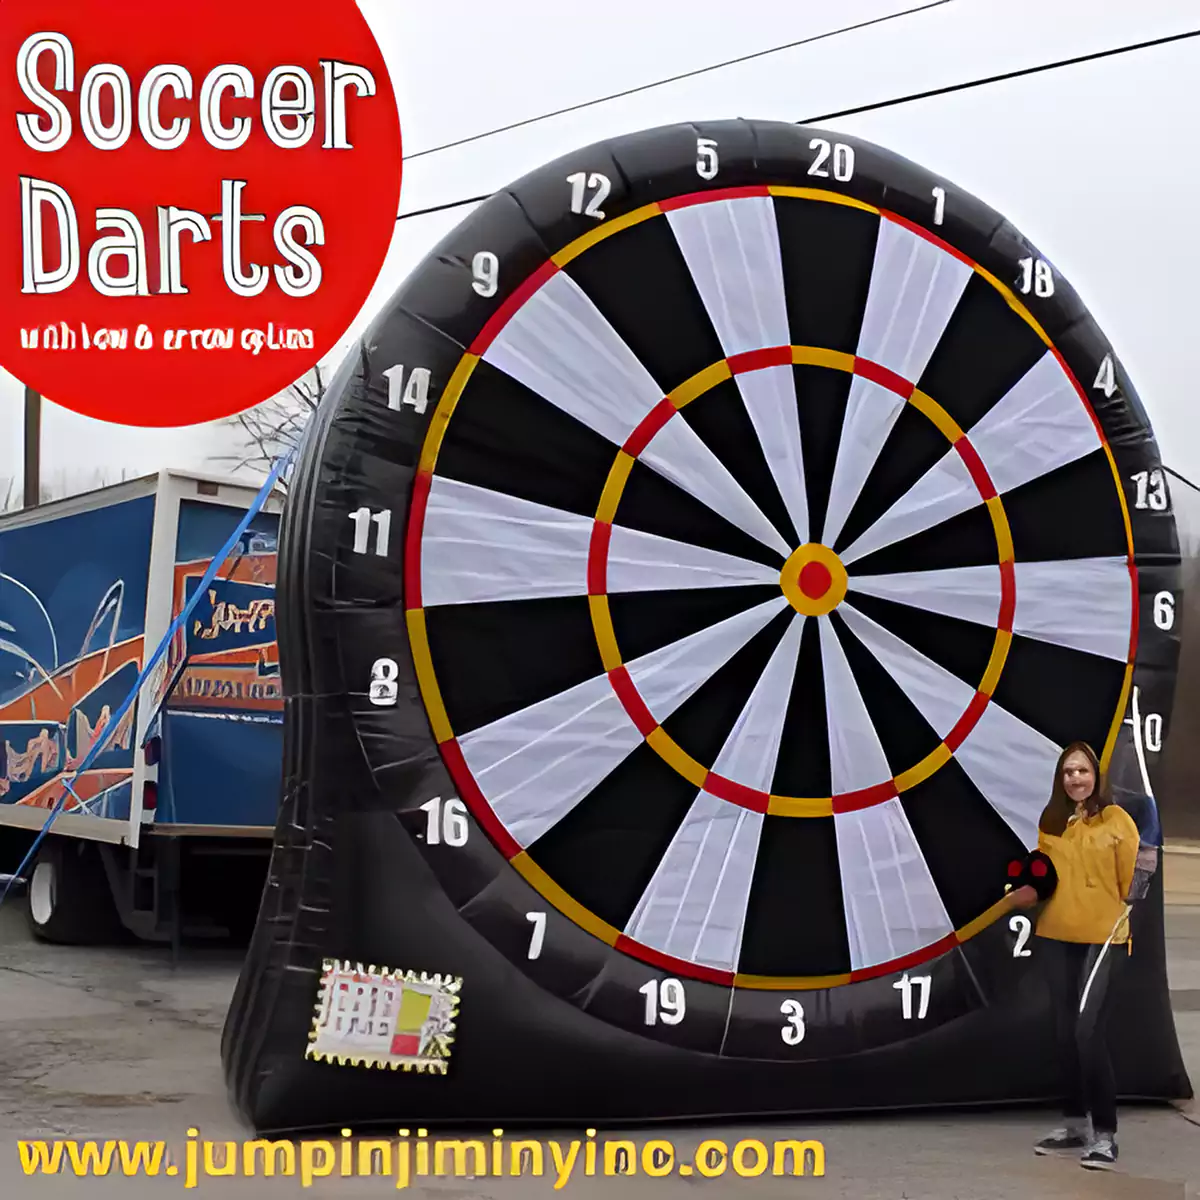 Soccer Darts Interactive Game